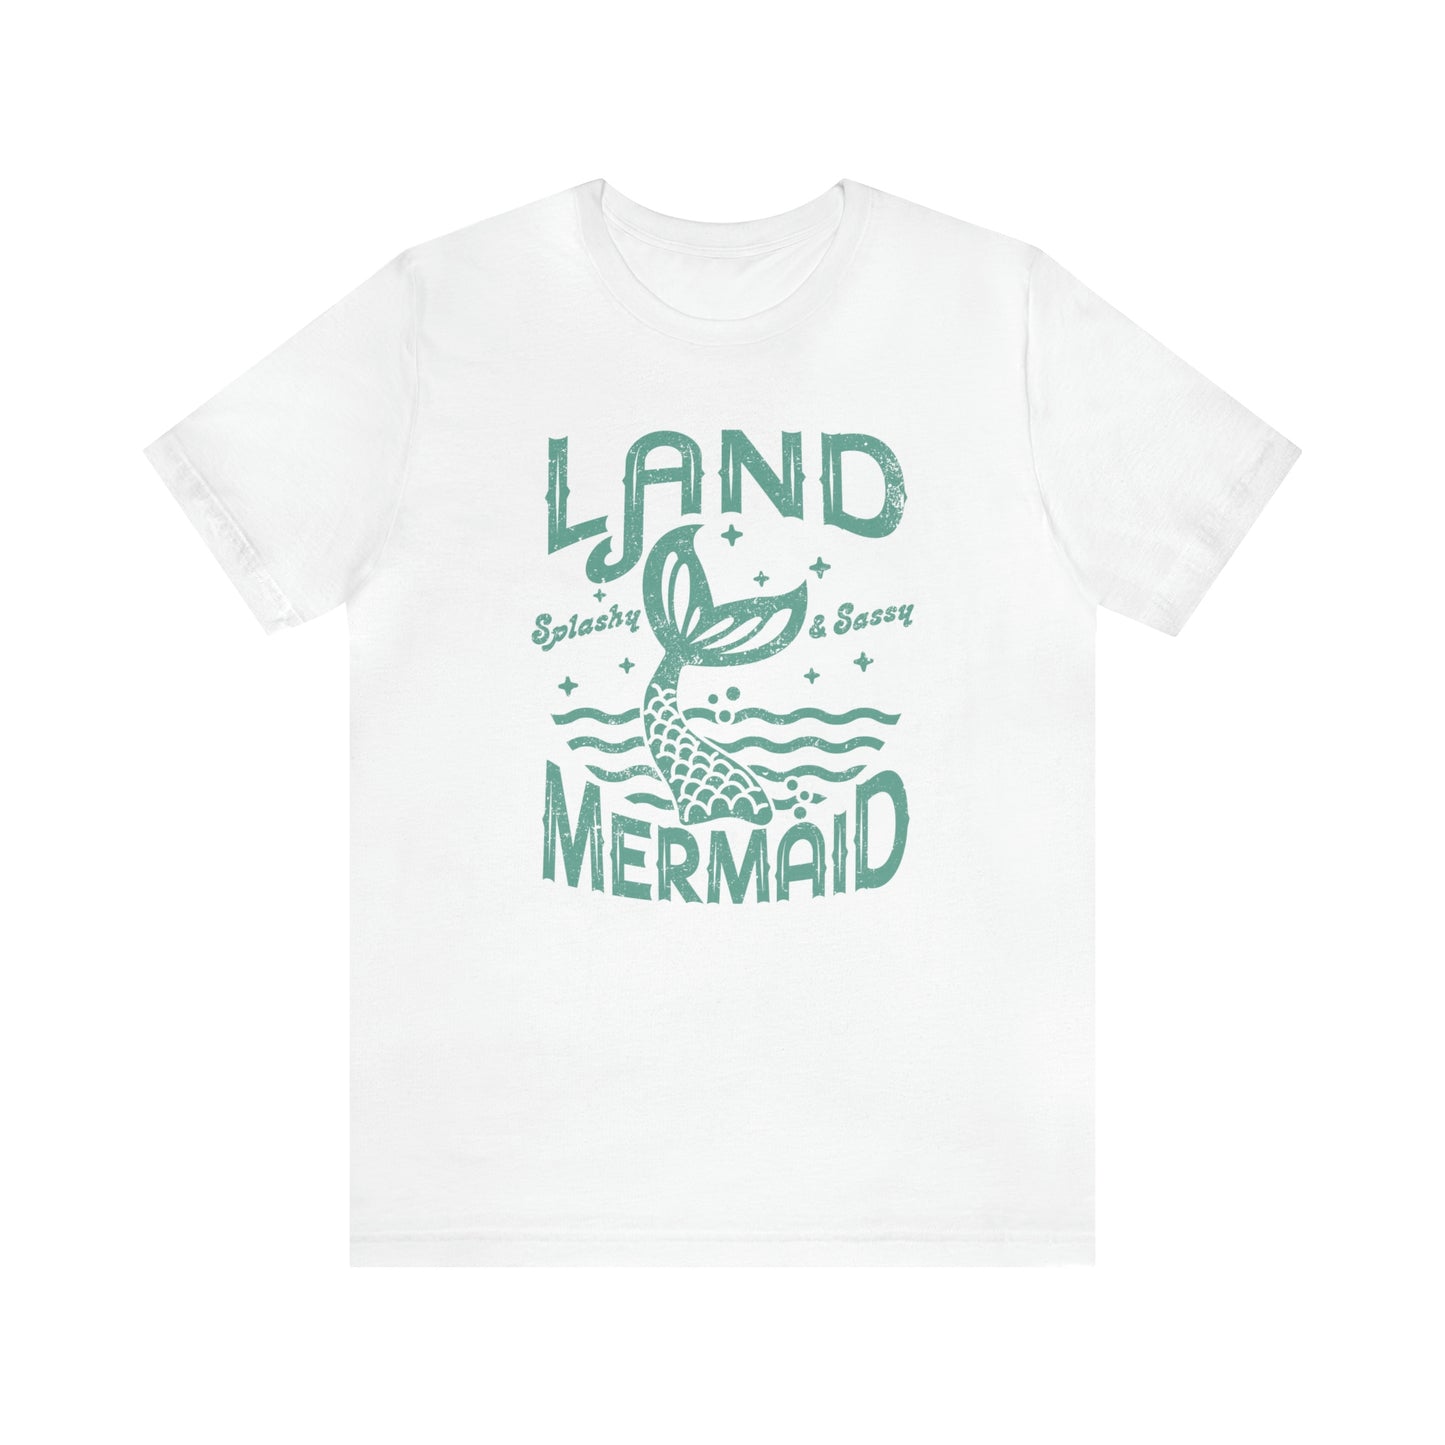 "Land Mermaid" Bella Canvas Short Sleeve Tee